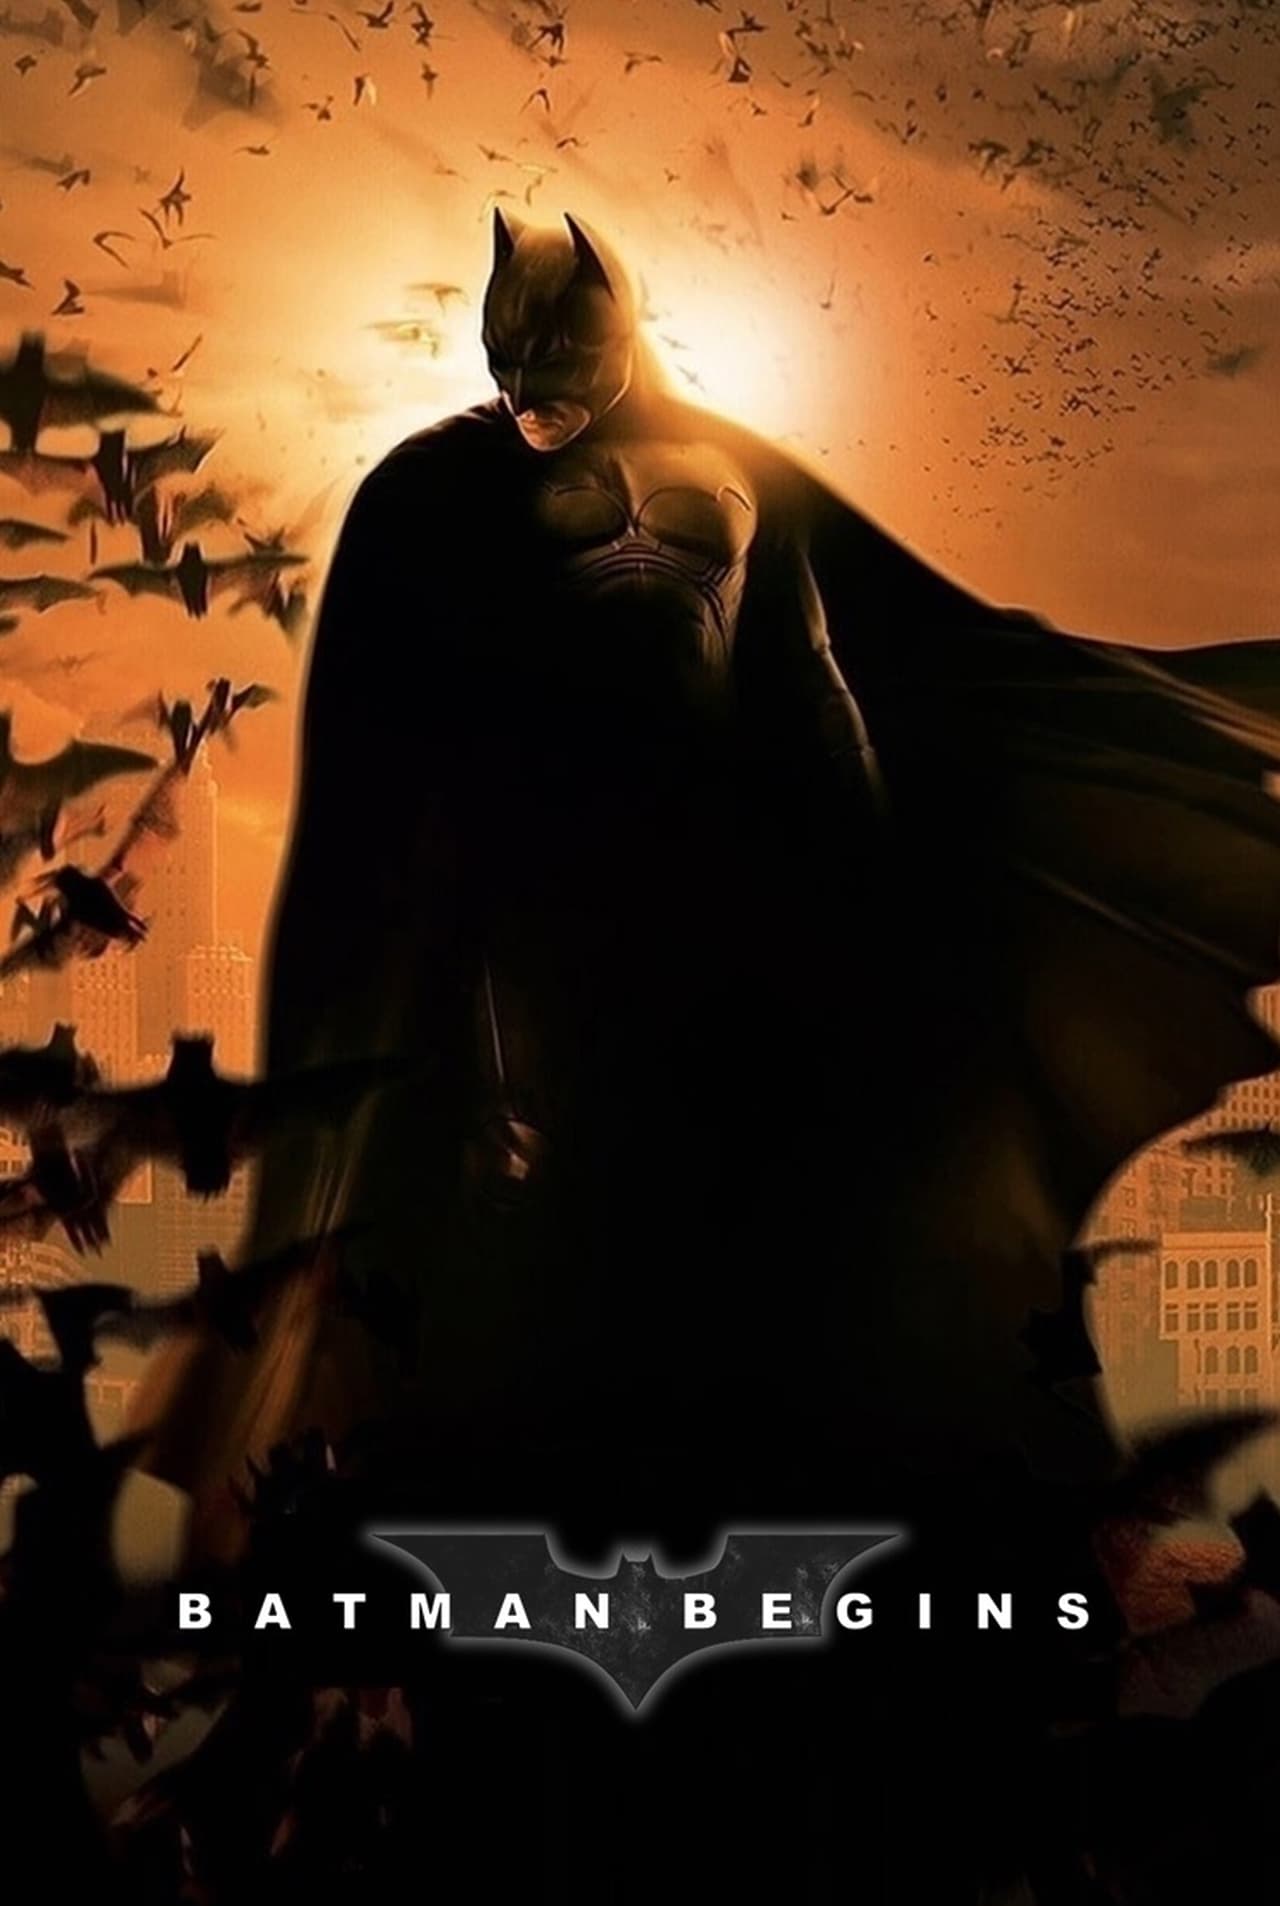 Art for Batman Begins by Christian Bale, Michael Caine, Liam Neeson, Katie Holmes, Gary Oldman